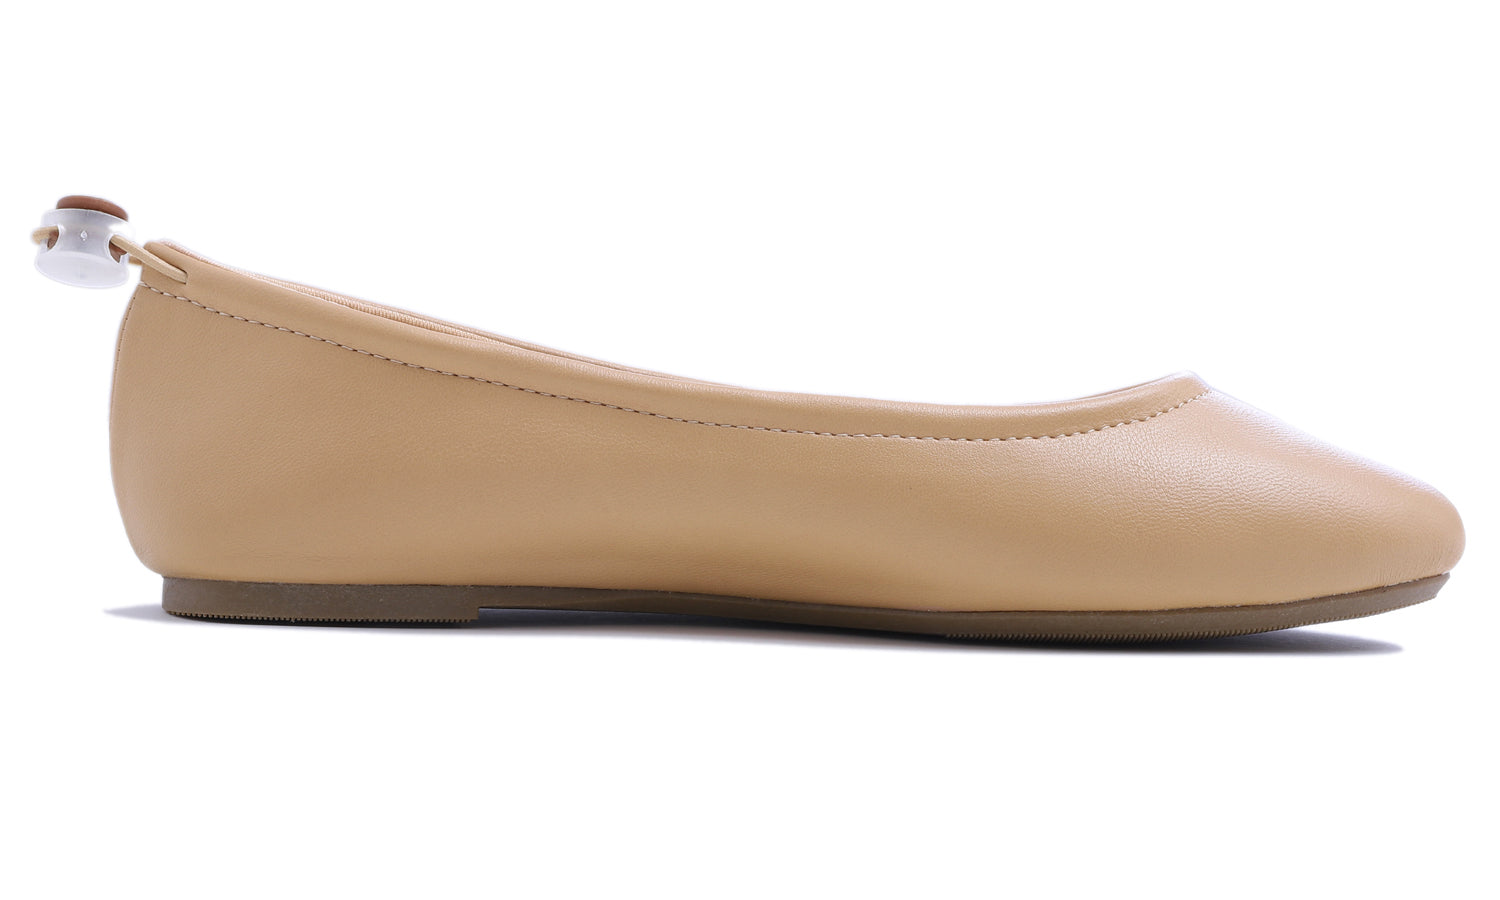 Feversole Women's Soft Cushion Comfort Round Toe Elastic Adjustable Ballet Flats Flexible Walking Shoes Light Tan Napa